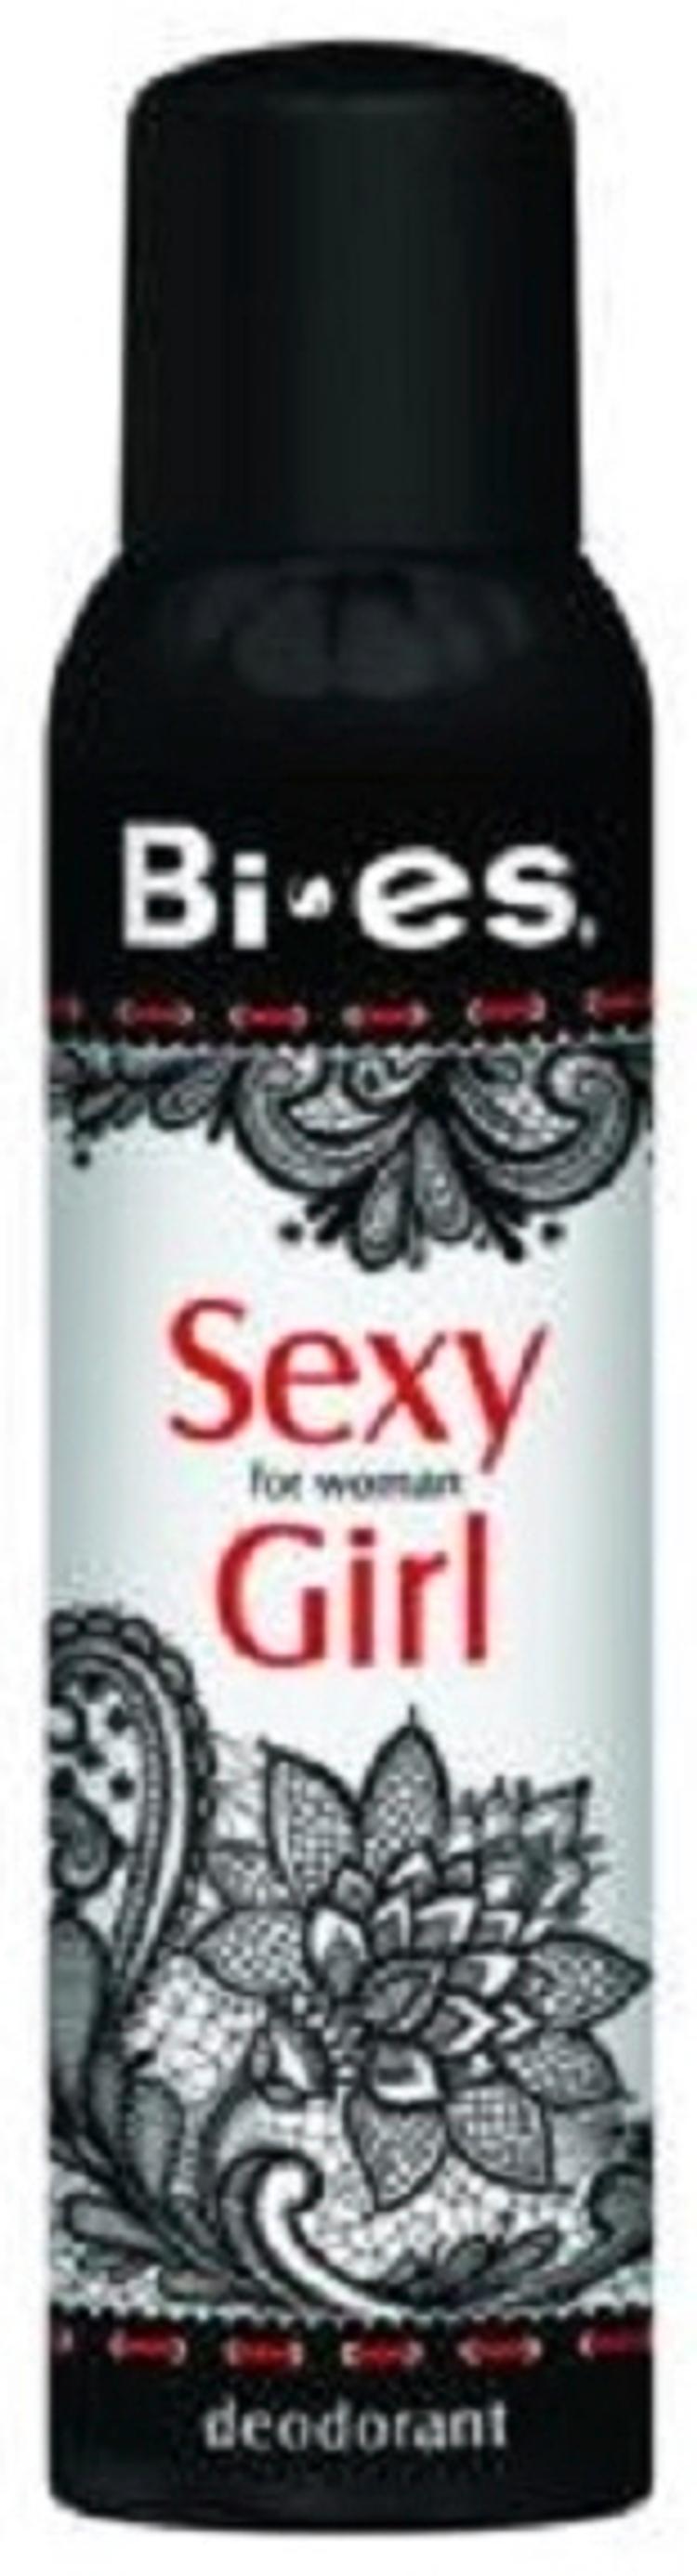 Bi-es 150ml deodorant for woman Sexy Girl Bi-es